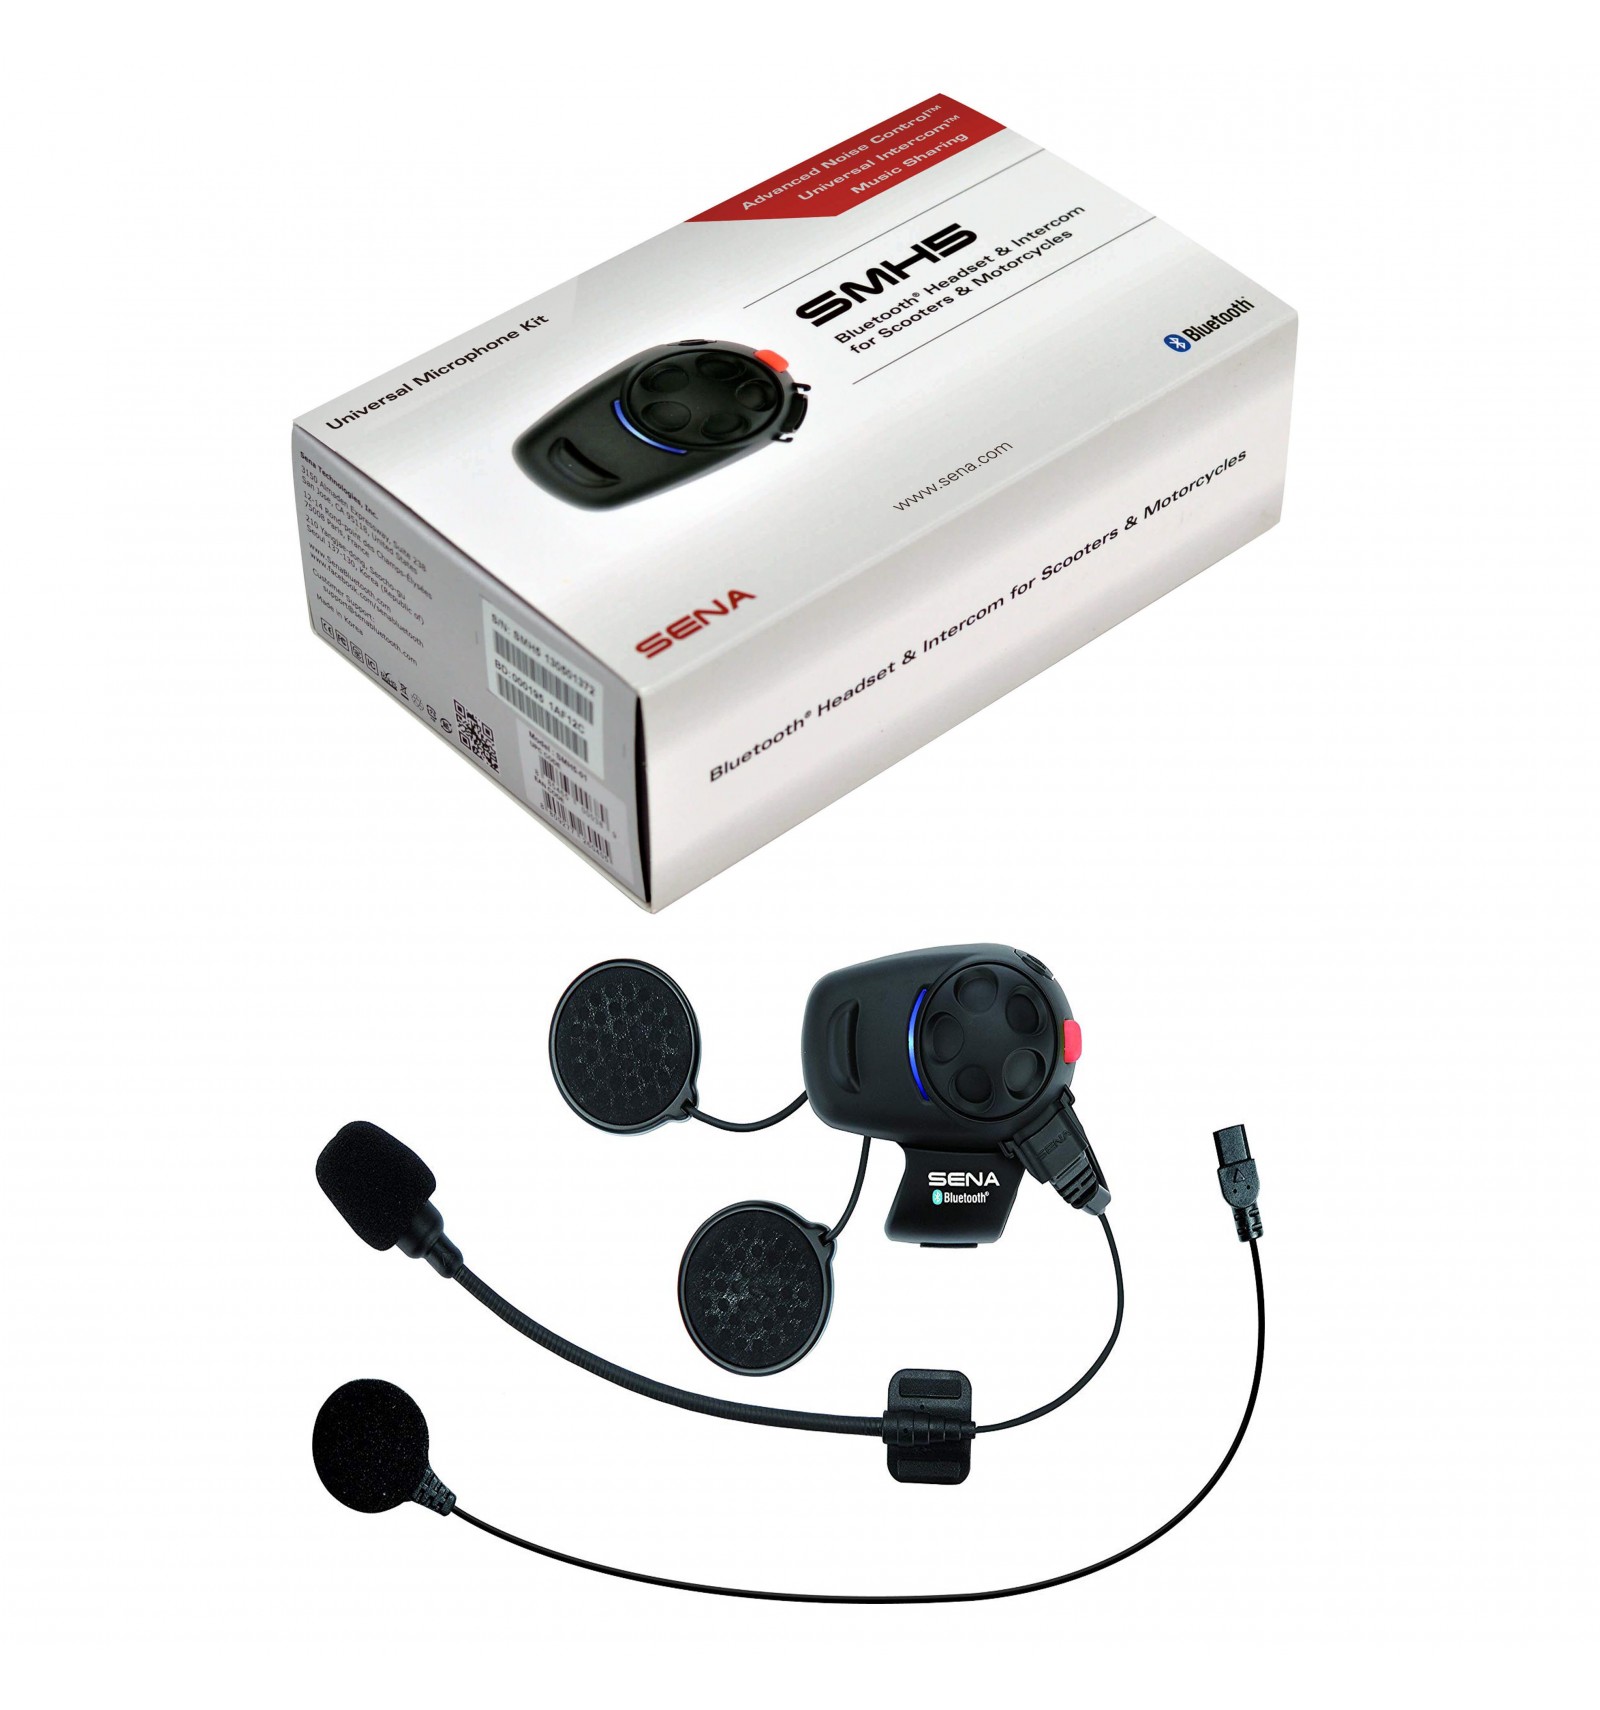 Sena 10S Headset And Intercom Single